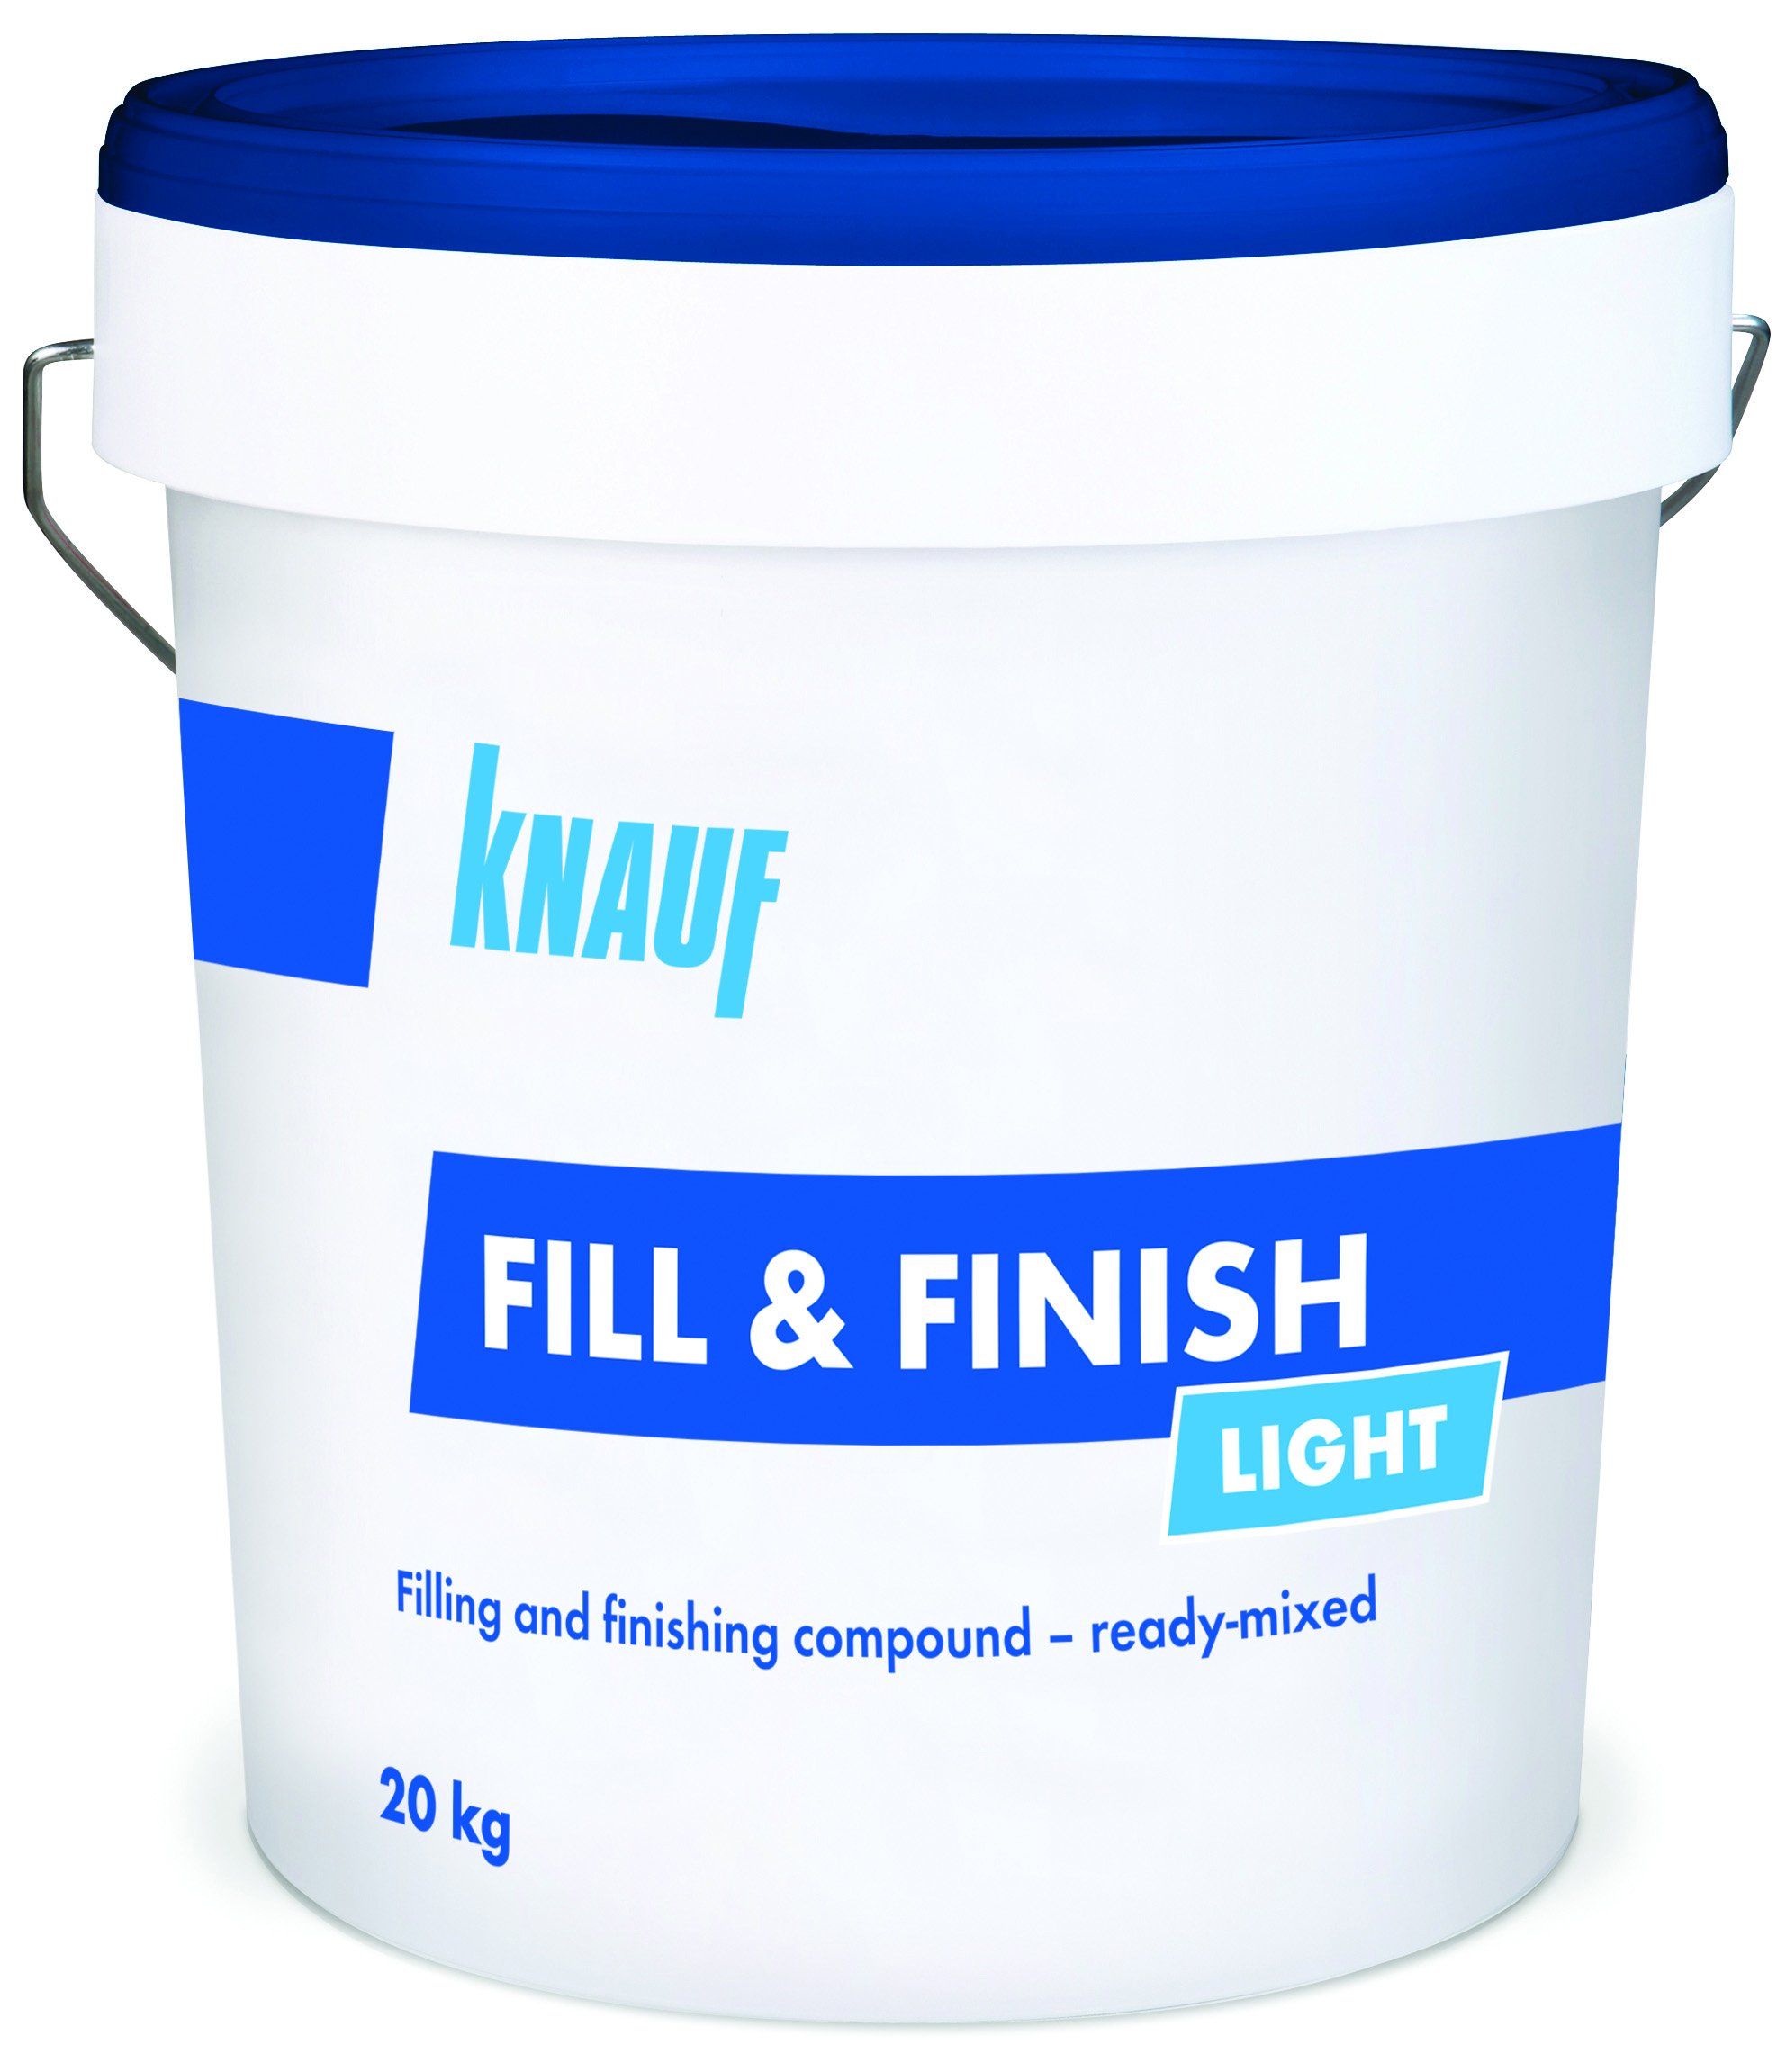 Sheetrock Blue Top Fill & Finish Light Joint Compound 20kg